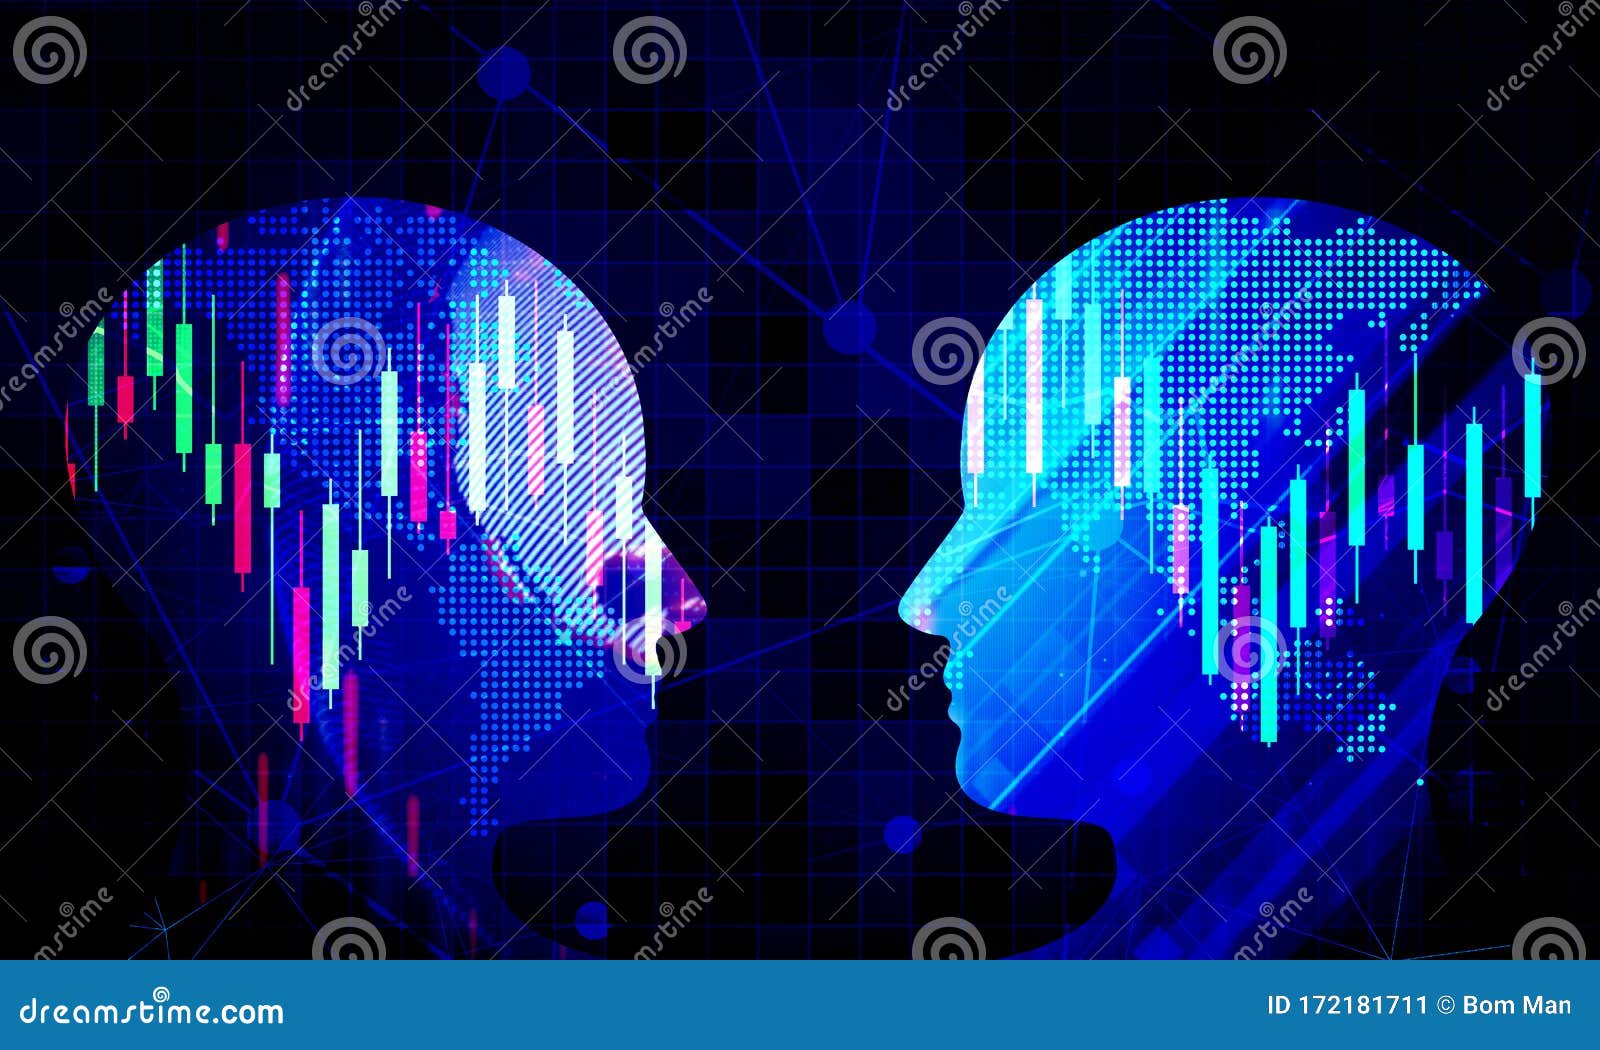 Human Head Concepts A I Stock Market Stock Illustration Illustration Of Head Computer 172181711